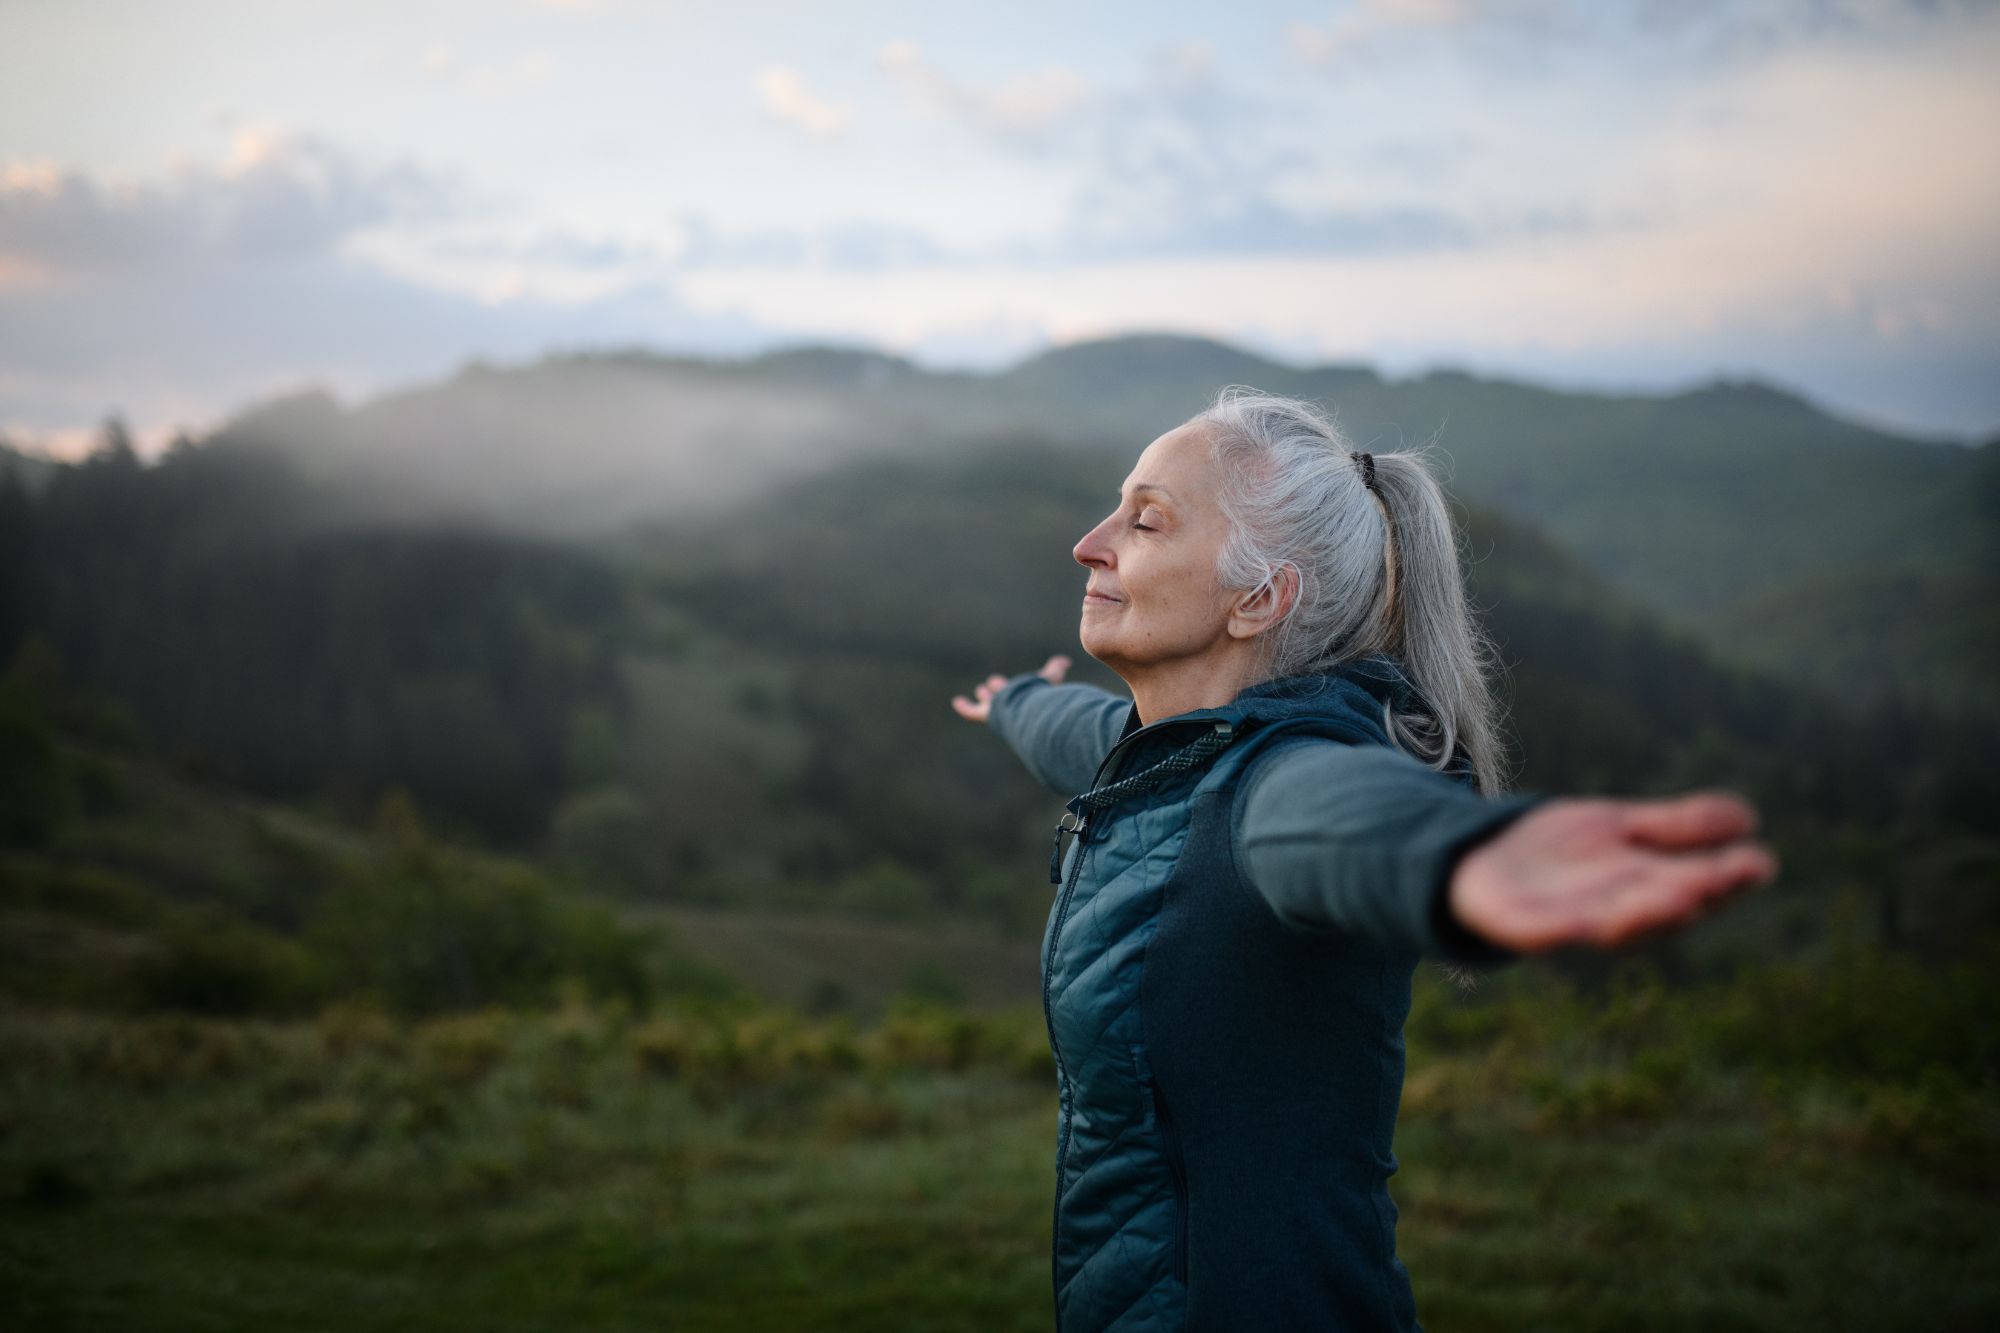 A senior woman taking deep breaths in nature, enjoying life